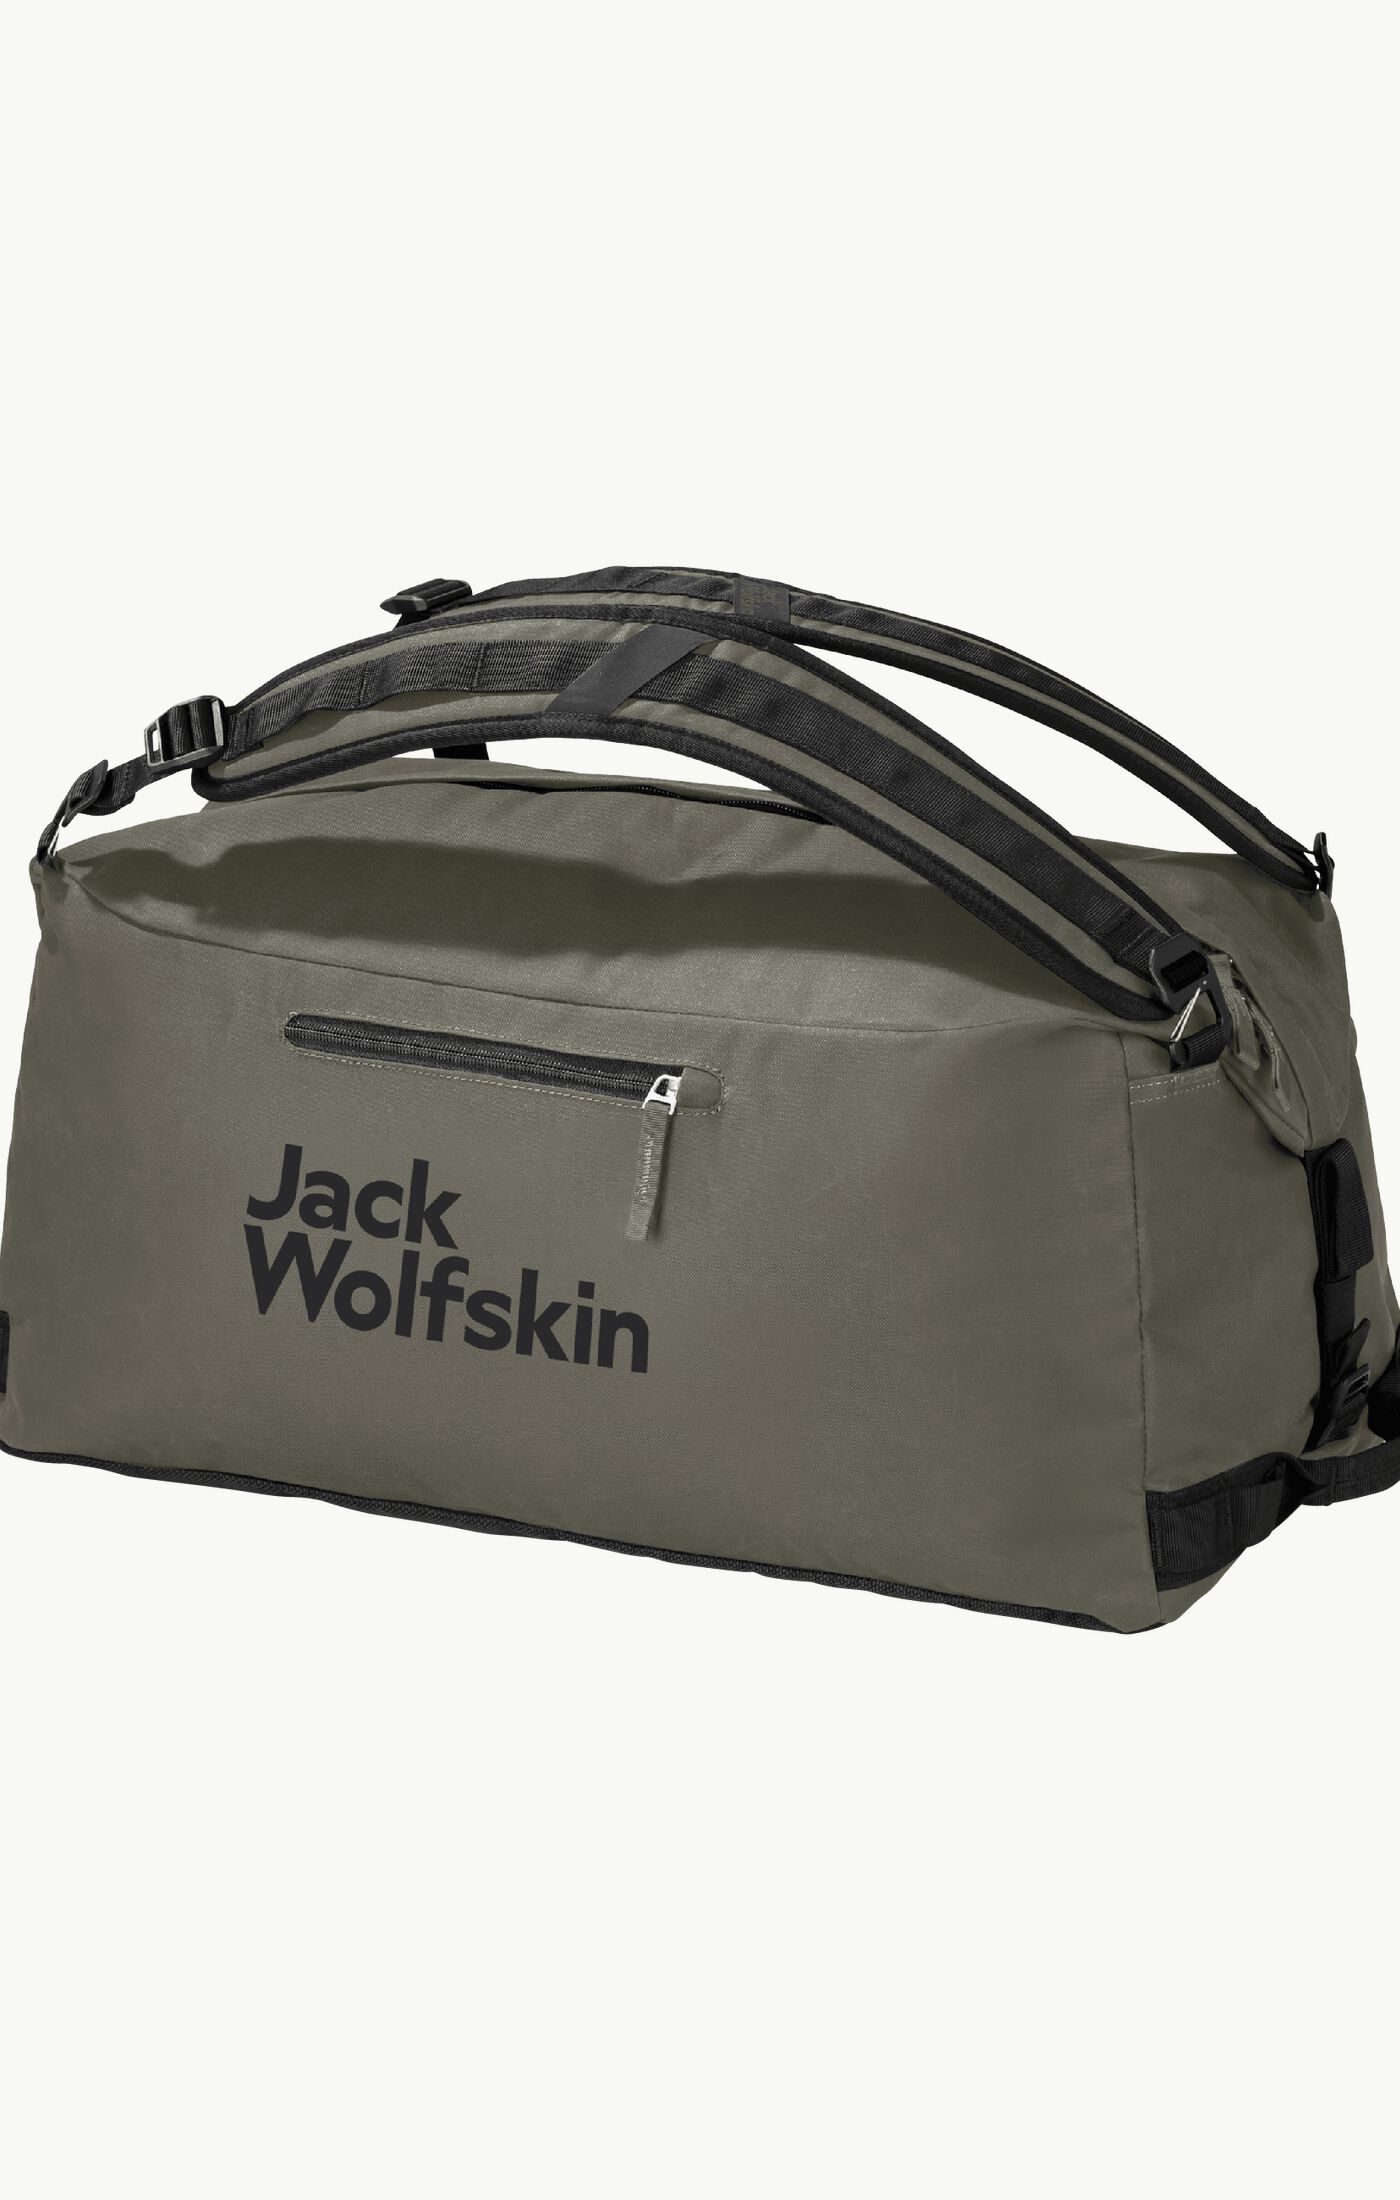 Jack Wolfskin Traveltopia Duffle 45 Dusty olive